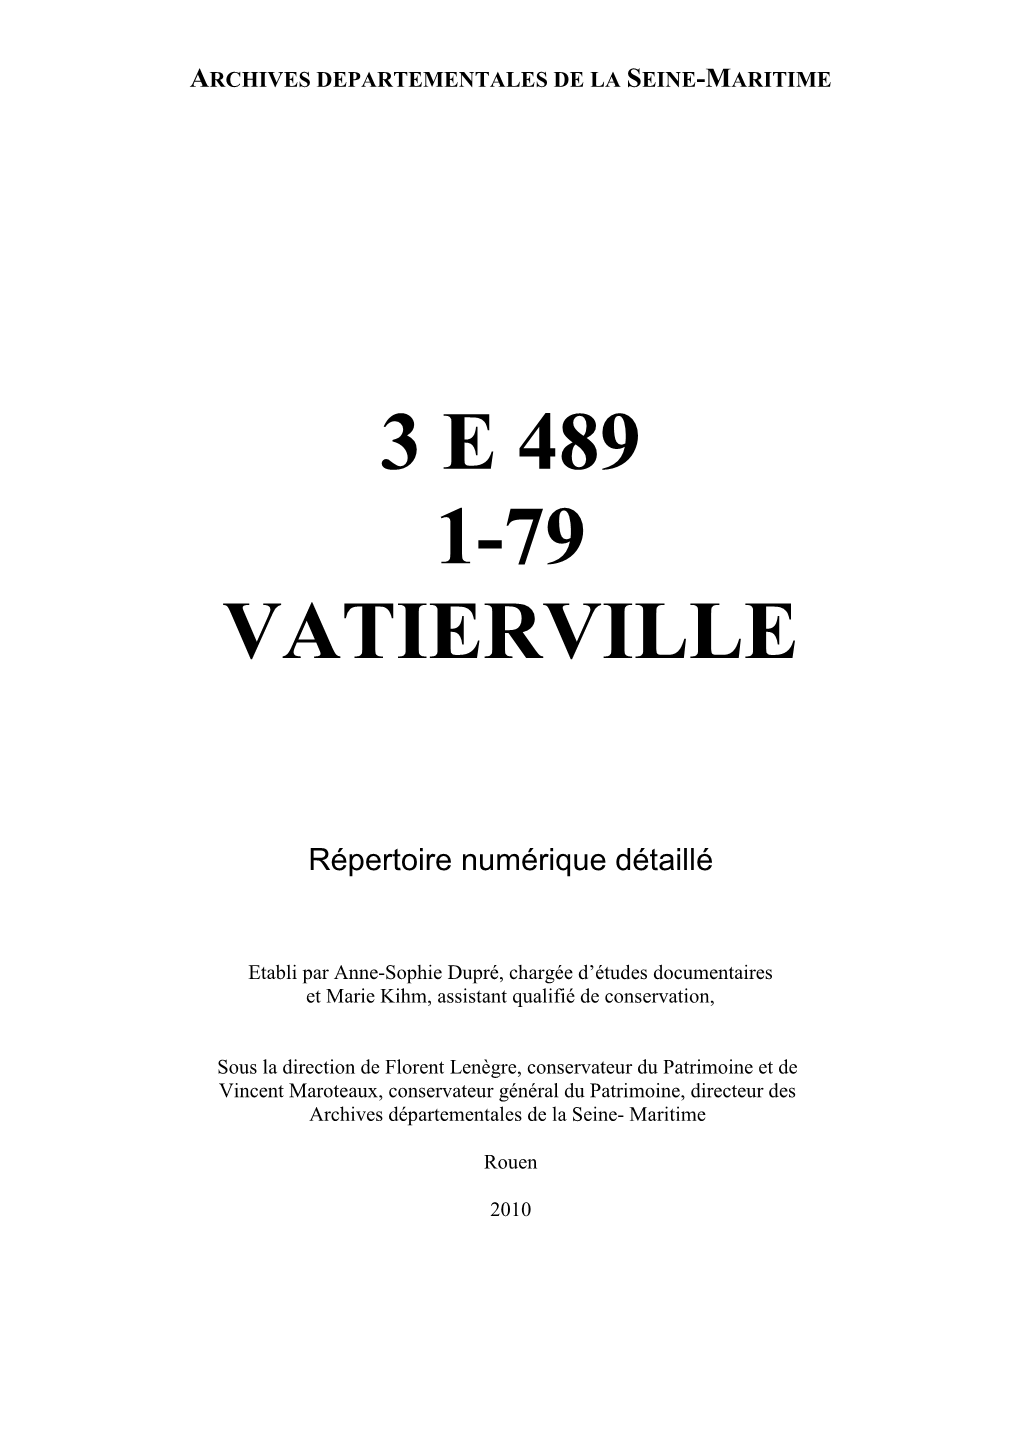 3 E 489 1-79 Vatierville